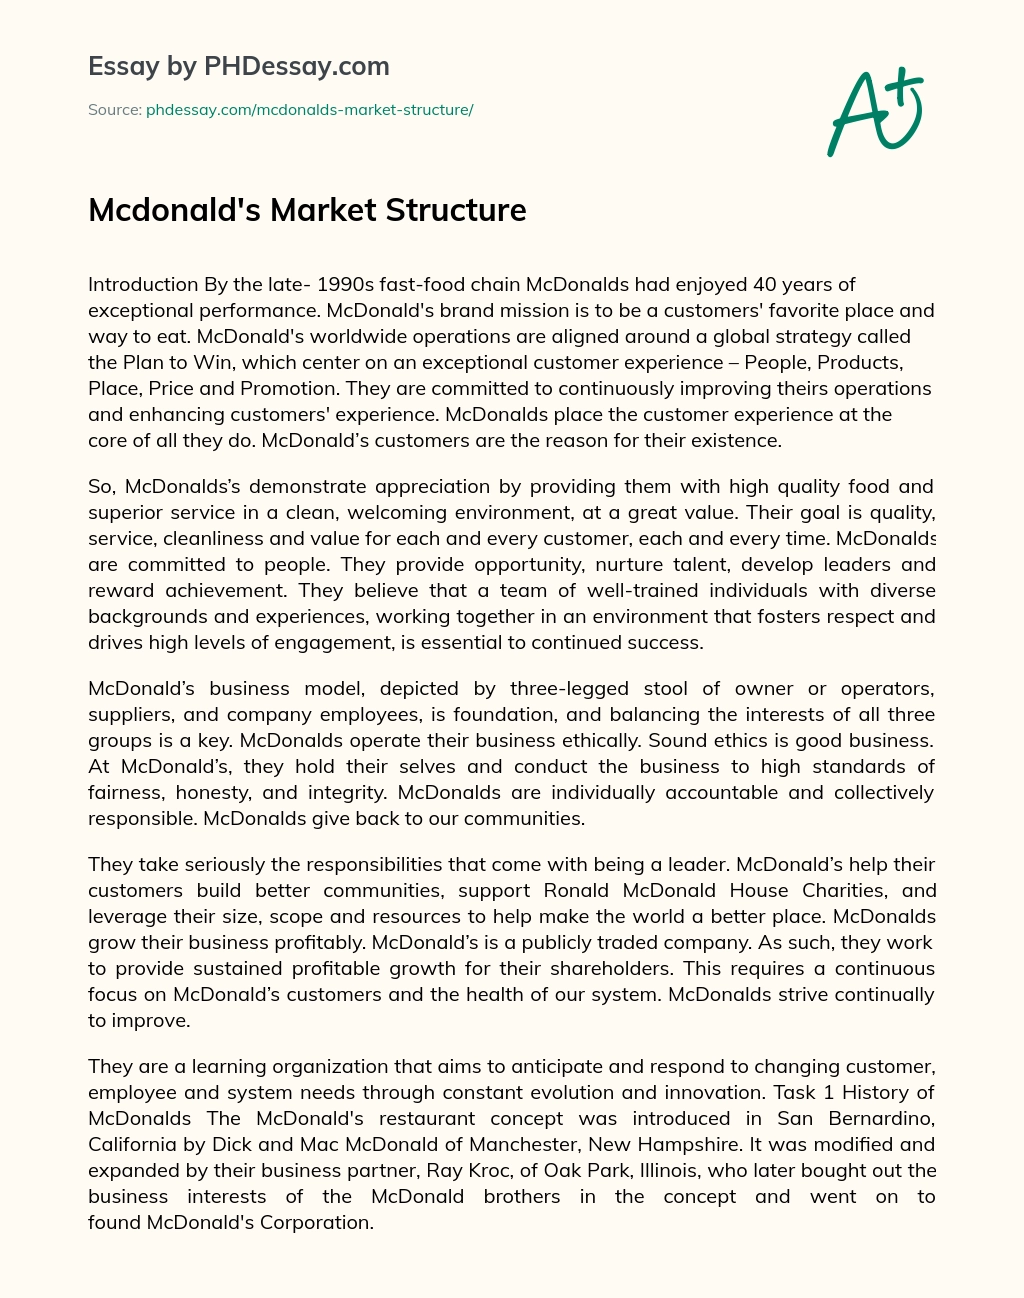 Mcdonald’s Market Structure essay